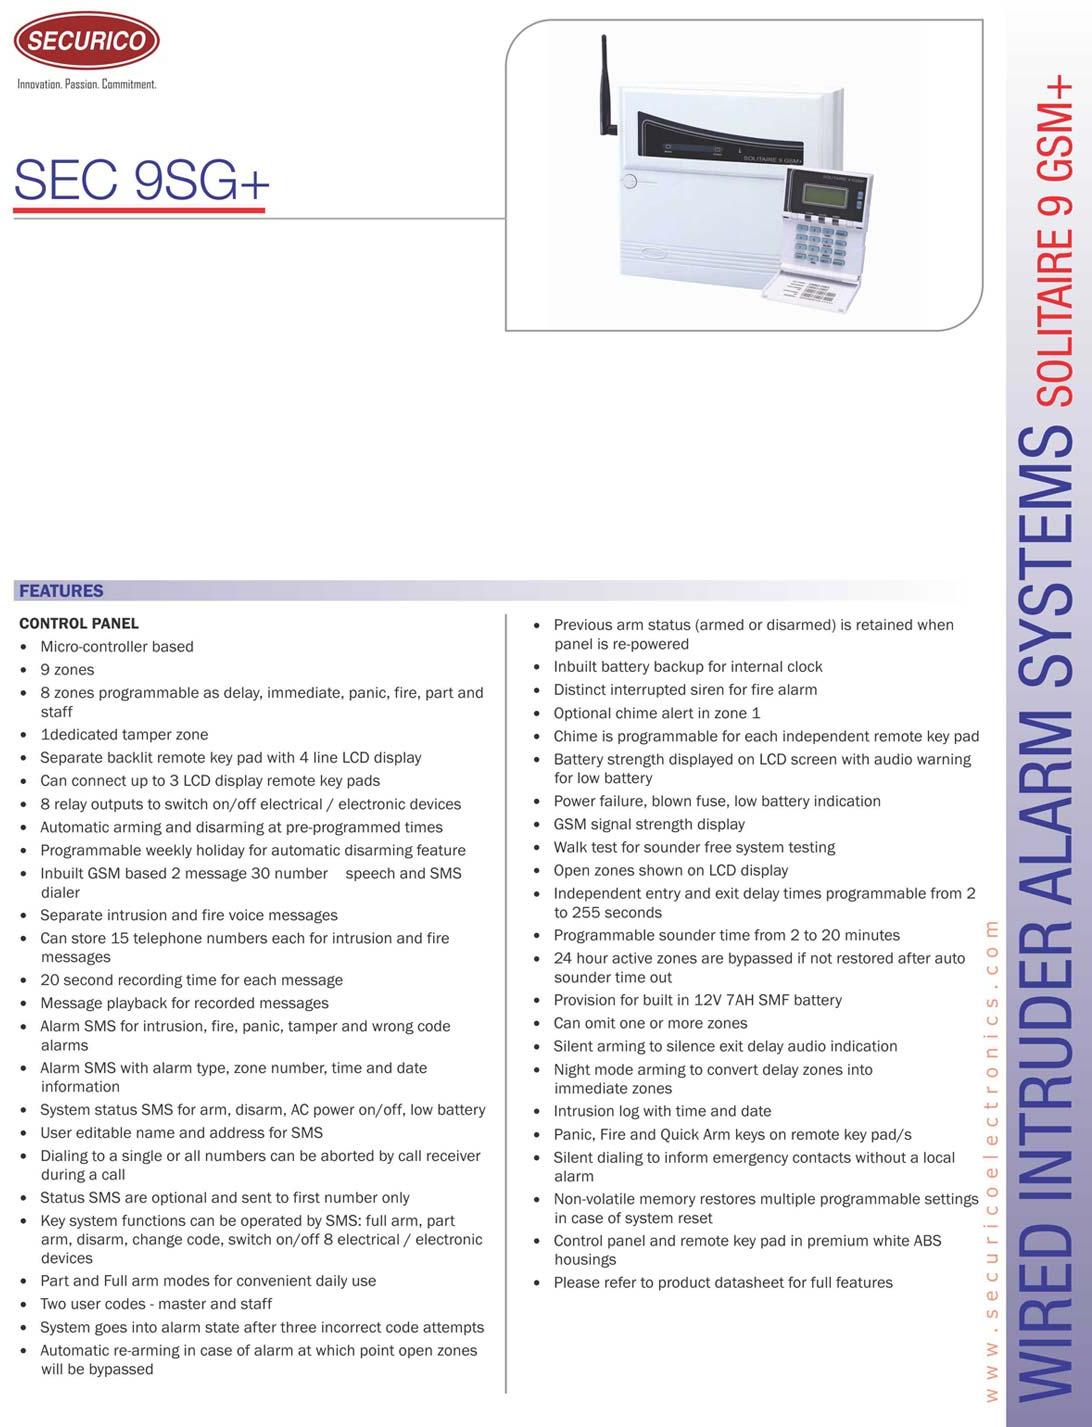 Securico Security Alarm System